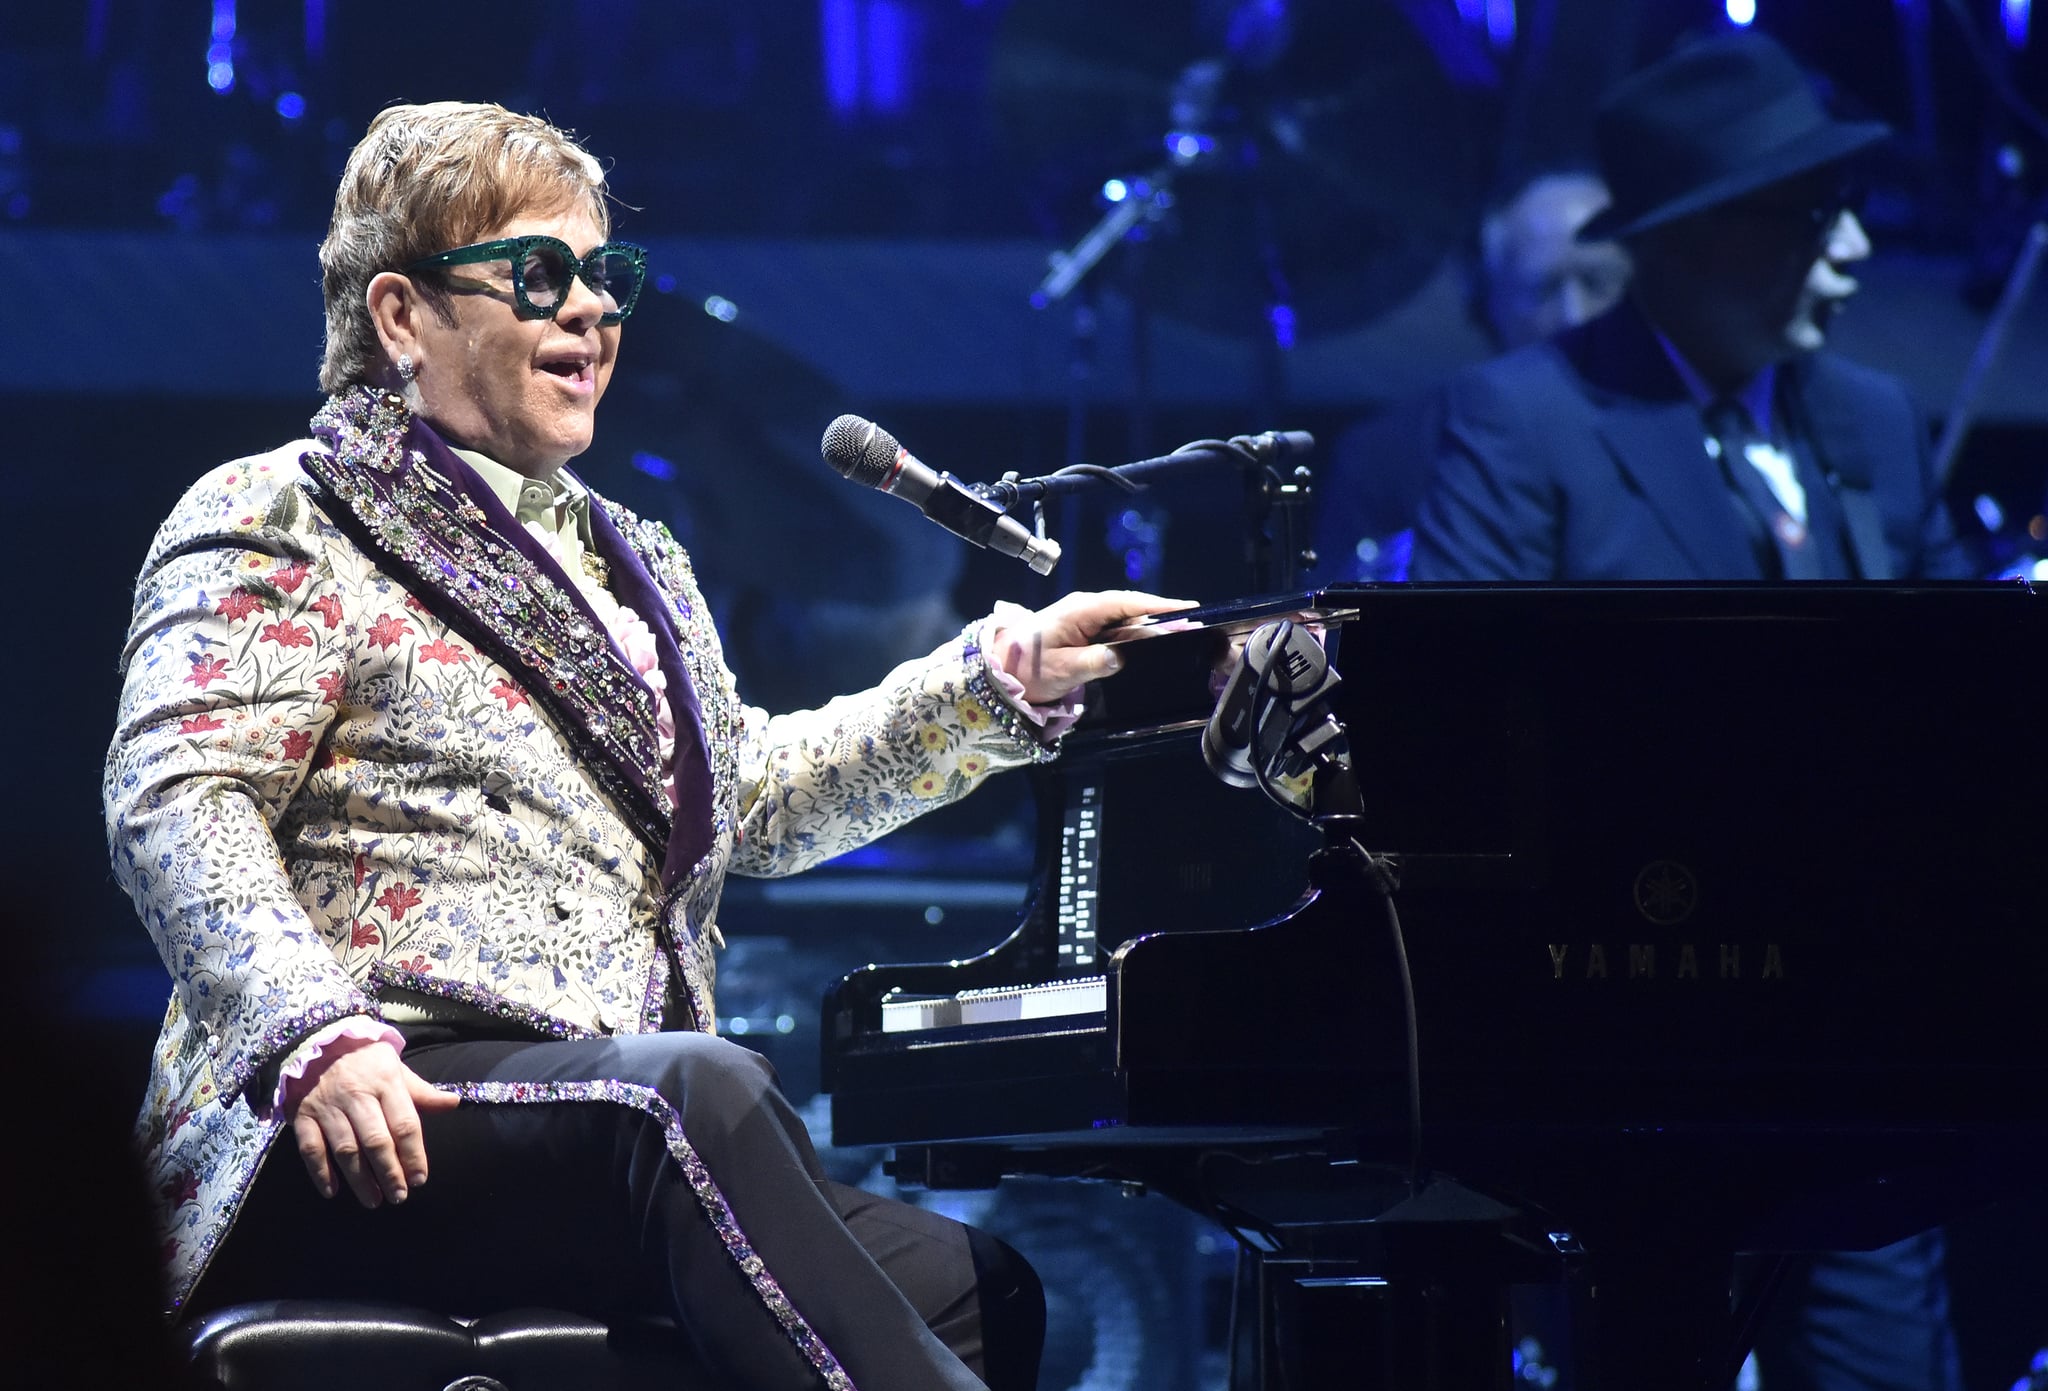 SACRAMENTO, CALIFORNIA - JANUARY 16: Elton John performs during his